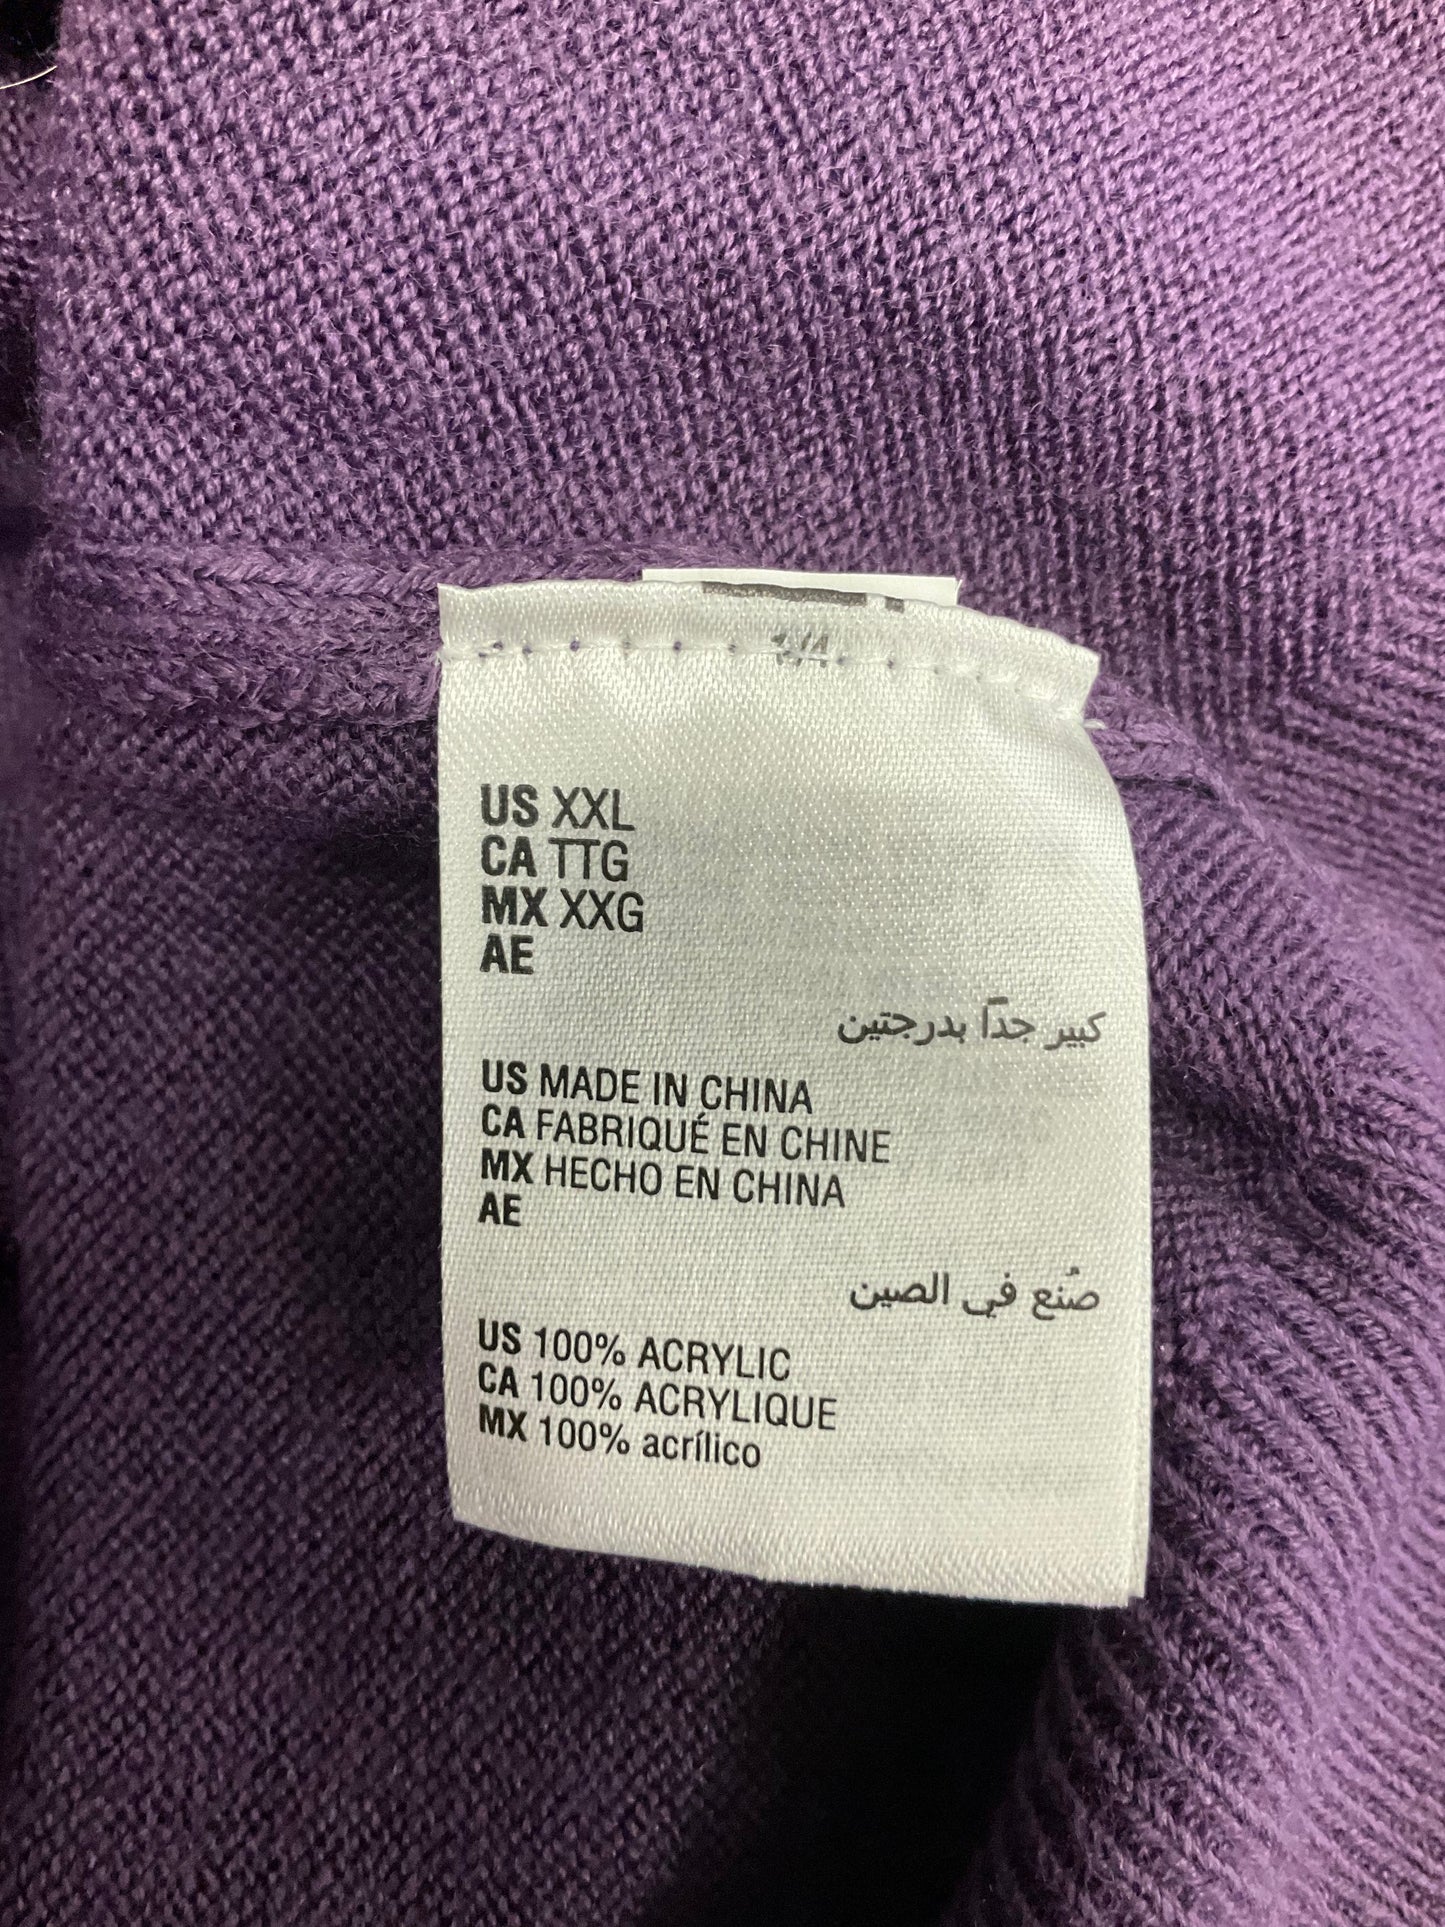 Purple Sweater Karen Scott, Size Xxl